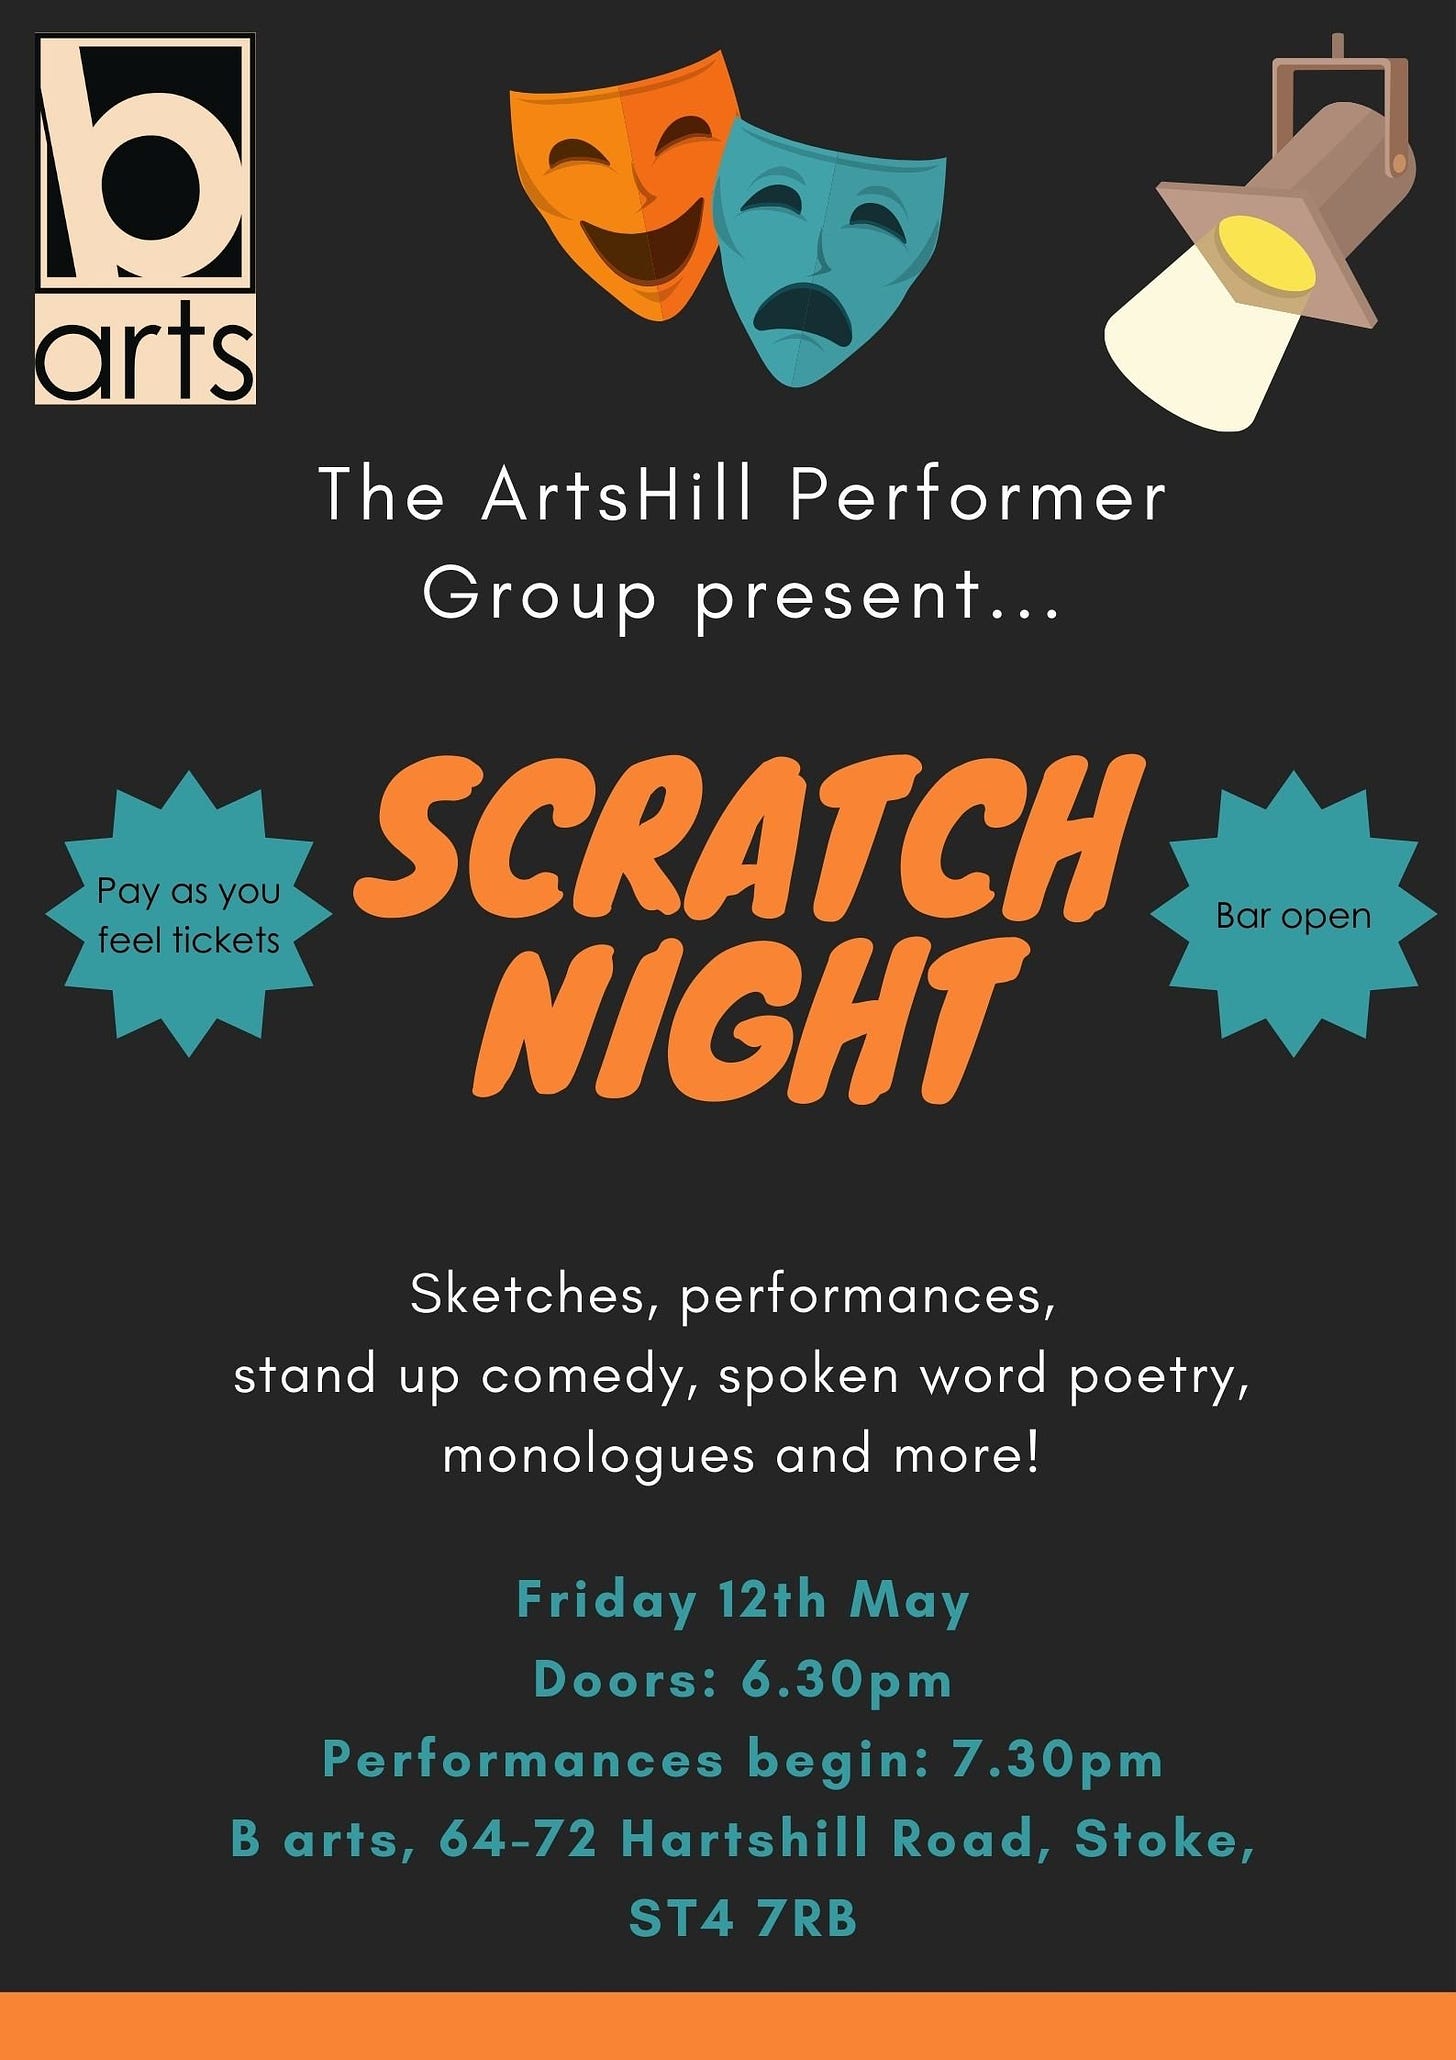 Scratch Night, Artshill Performers, B arts, Stoke